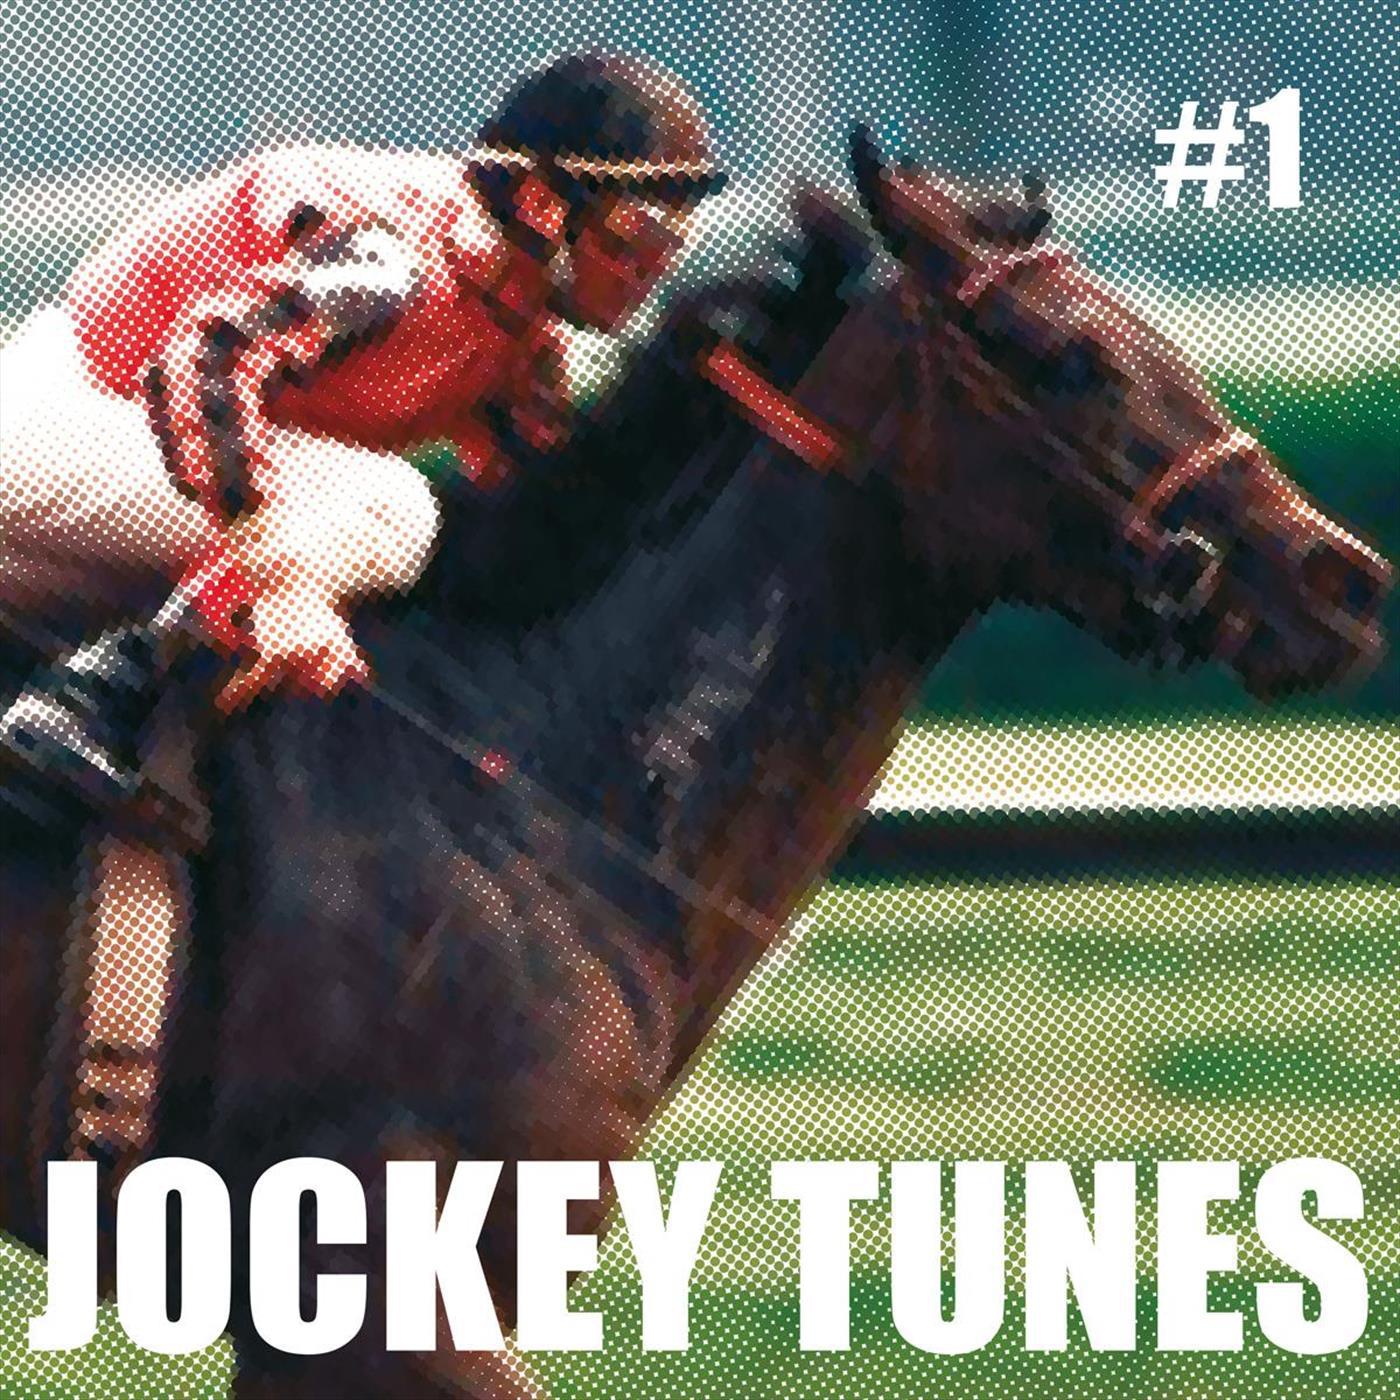 Jockey Tunes #1